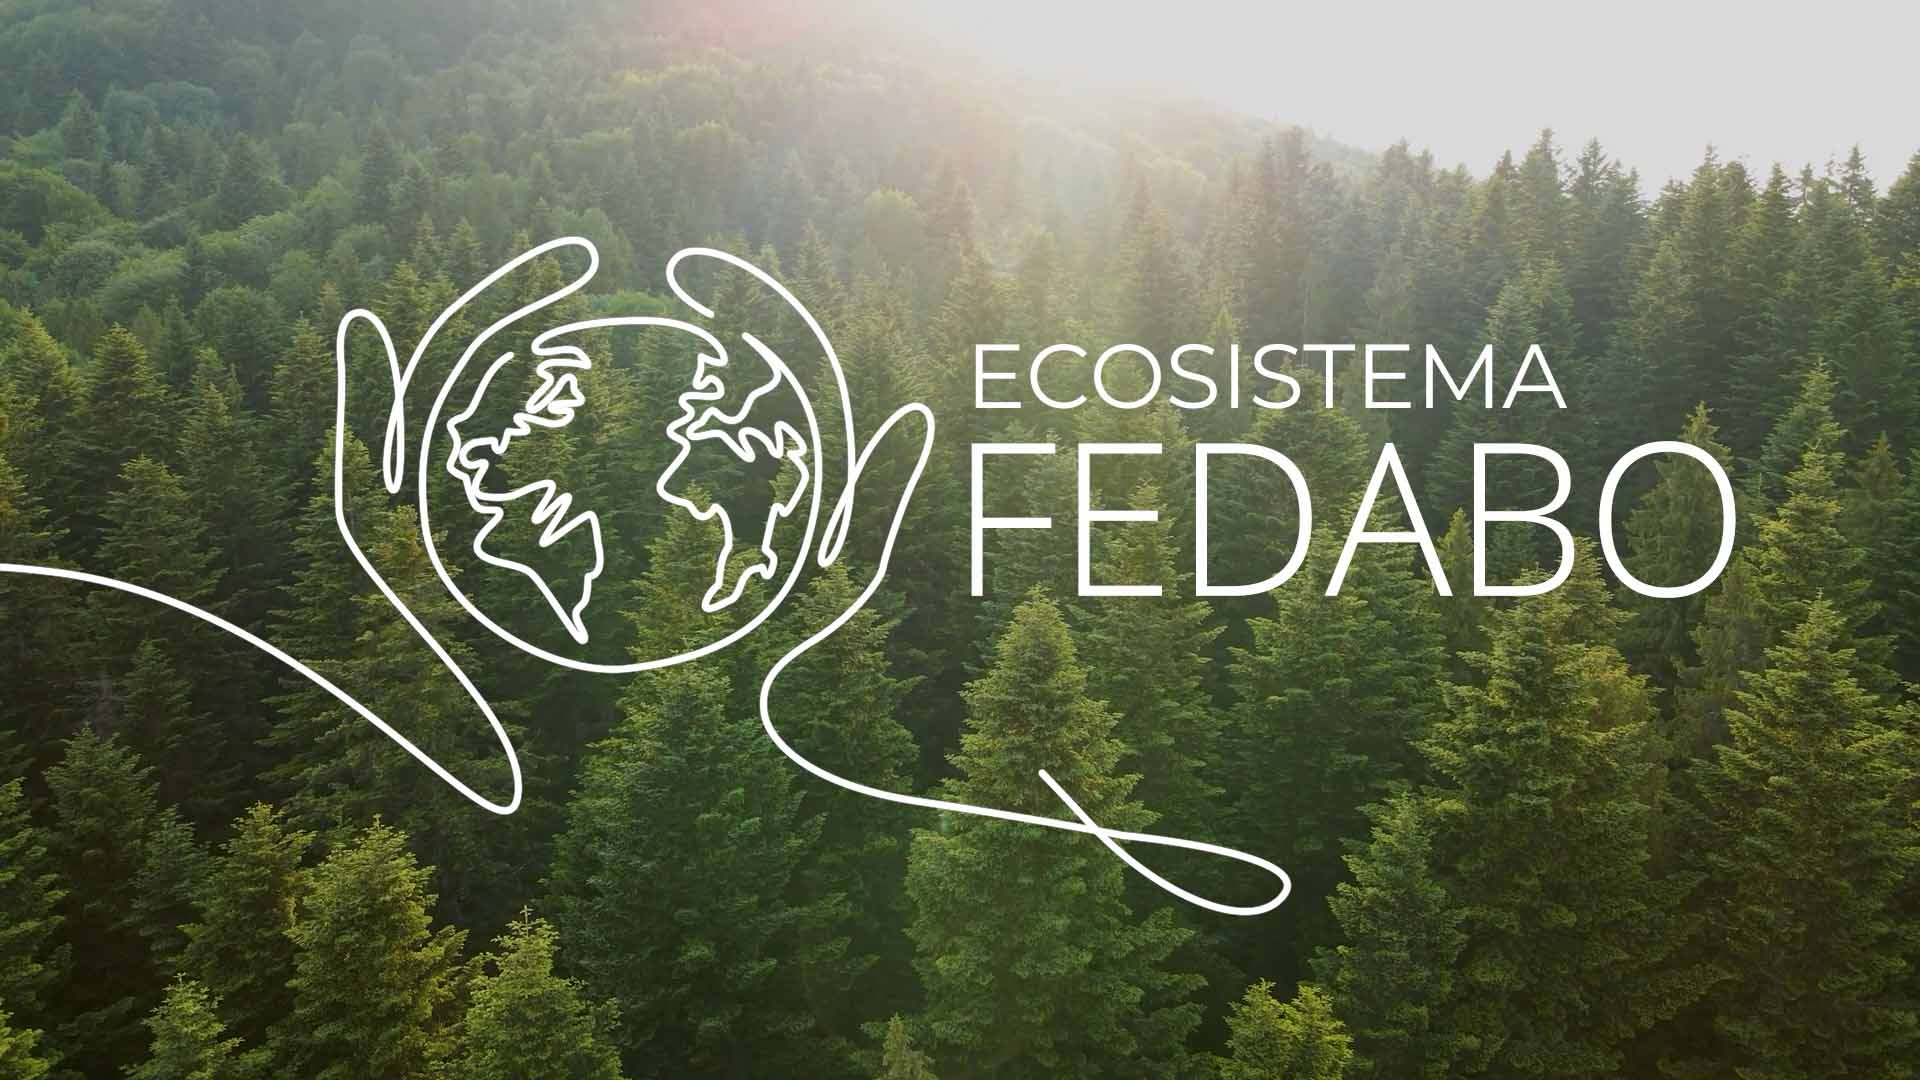 Ecosistema Fedabo